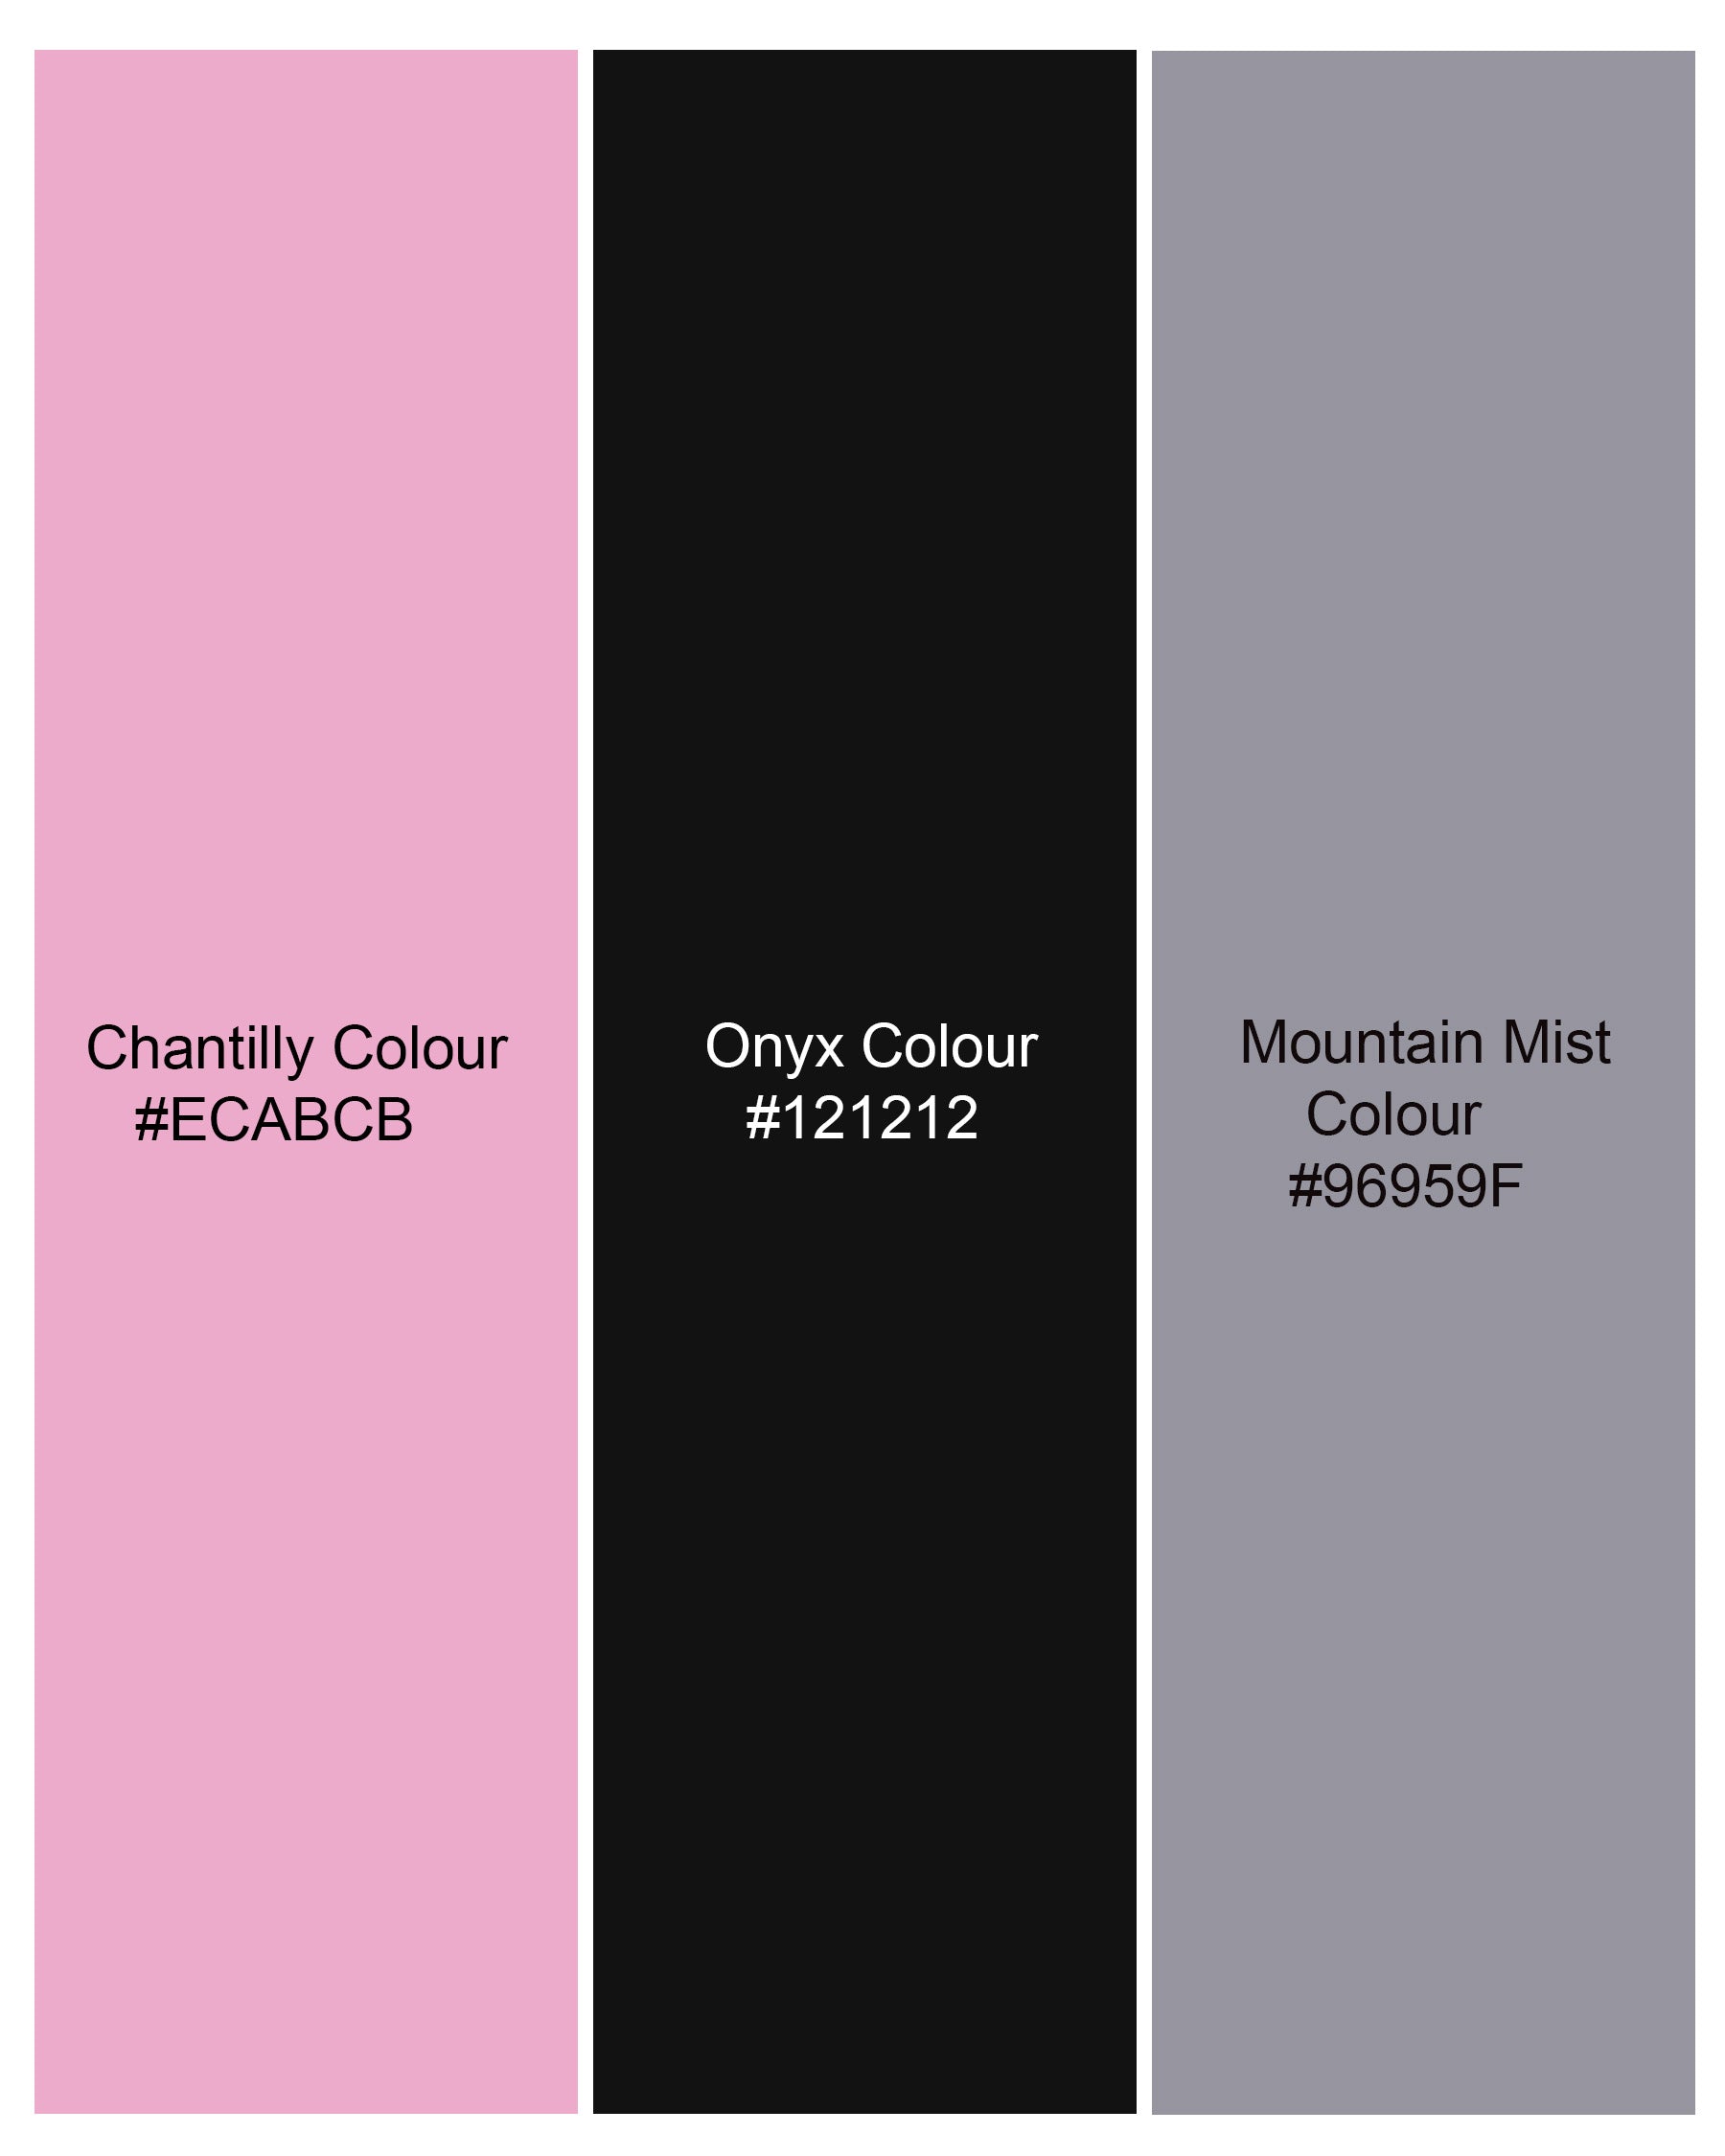 Chantilly Pink with Jade Black Ditsy Dobby Textured Premium Giza Cotton Designer Shirt 8113-P216-38, 8113-P216-H-38, 8113-P216-39, 8113-P216-H-39, 8113-P216-40, 8113-P216-H-40, 8113-P216-42, 8113-P216-H-42, 8113-P216-44, 8113-P216-H-44, 8113-P216-46, 8113-P216-H-46, 8113-P216-48, 8113-P216-H-48, 8113-P216-50, 8113-P216-H-50, 8113-P216-52, 8113-P216-H-52